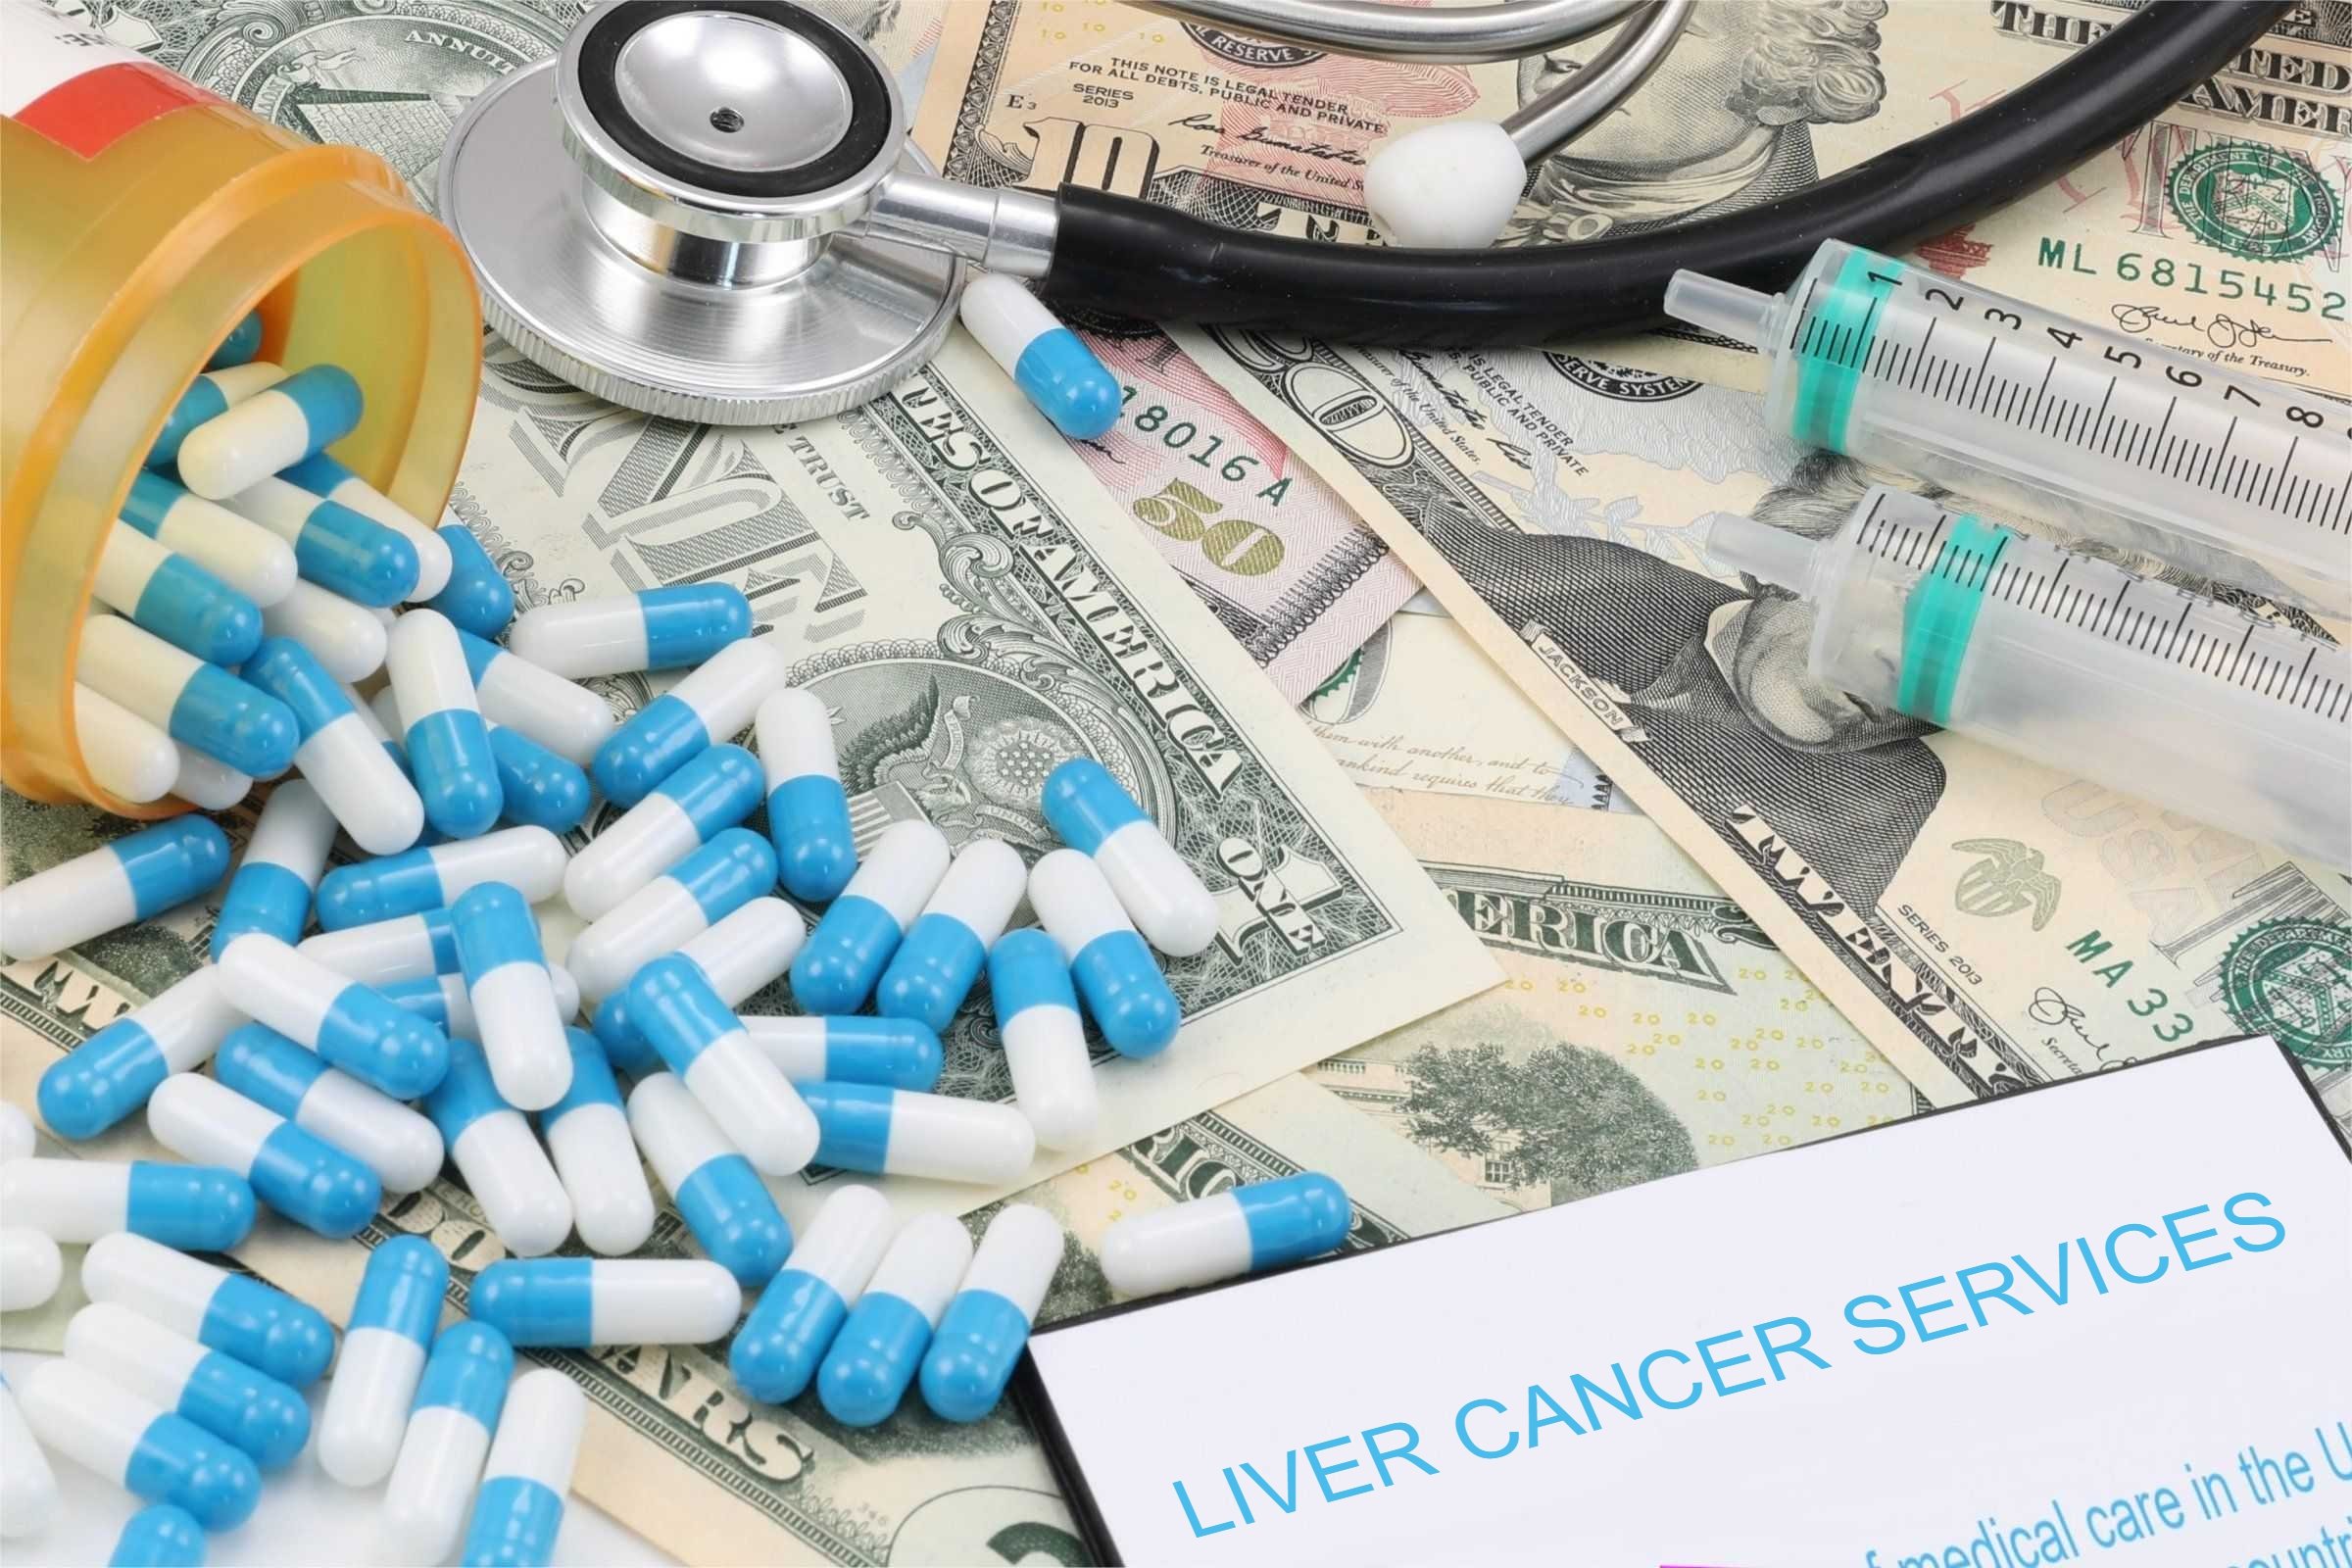 liver cancer services